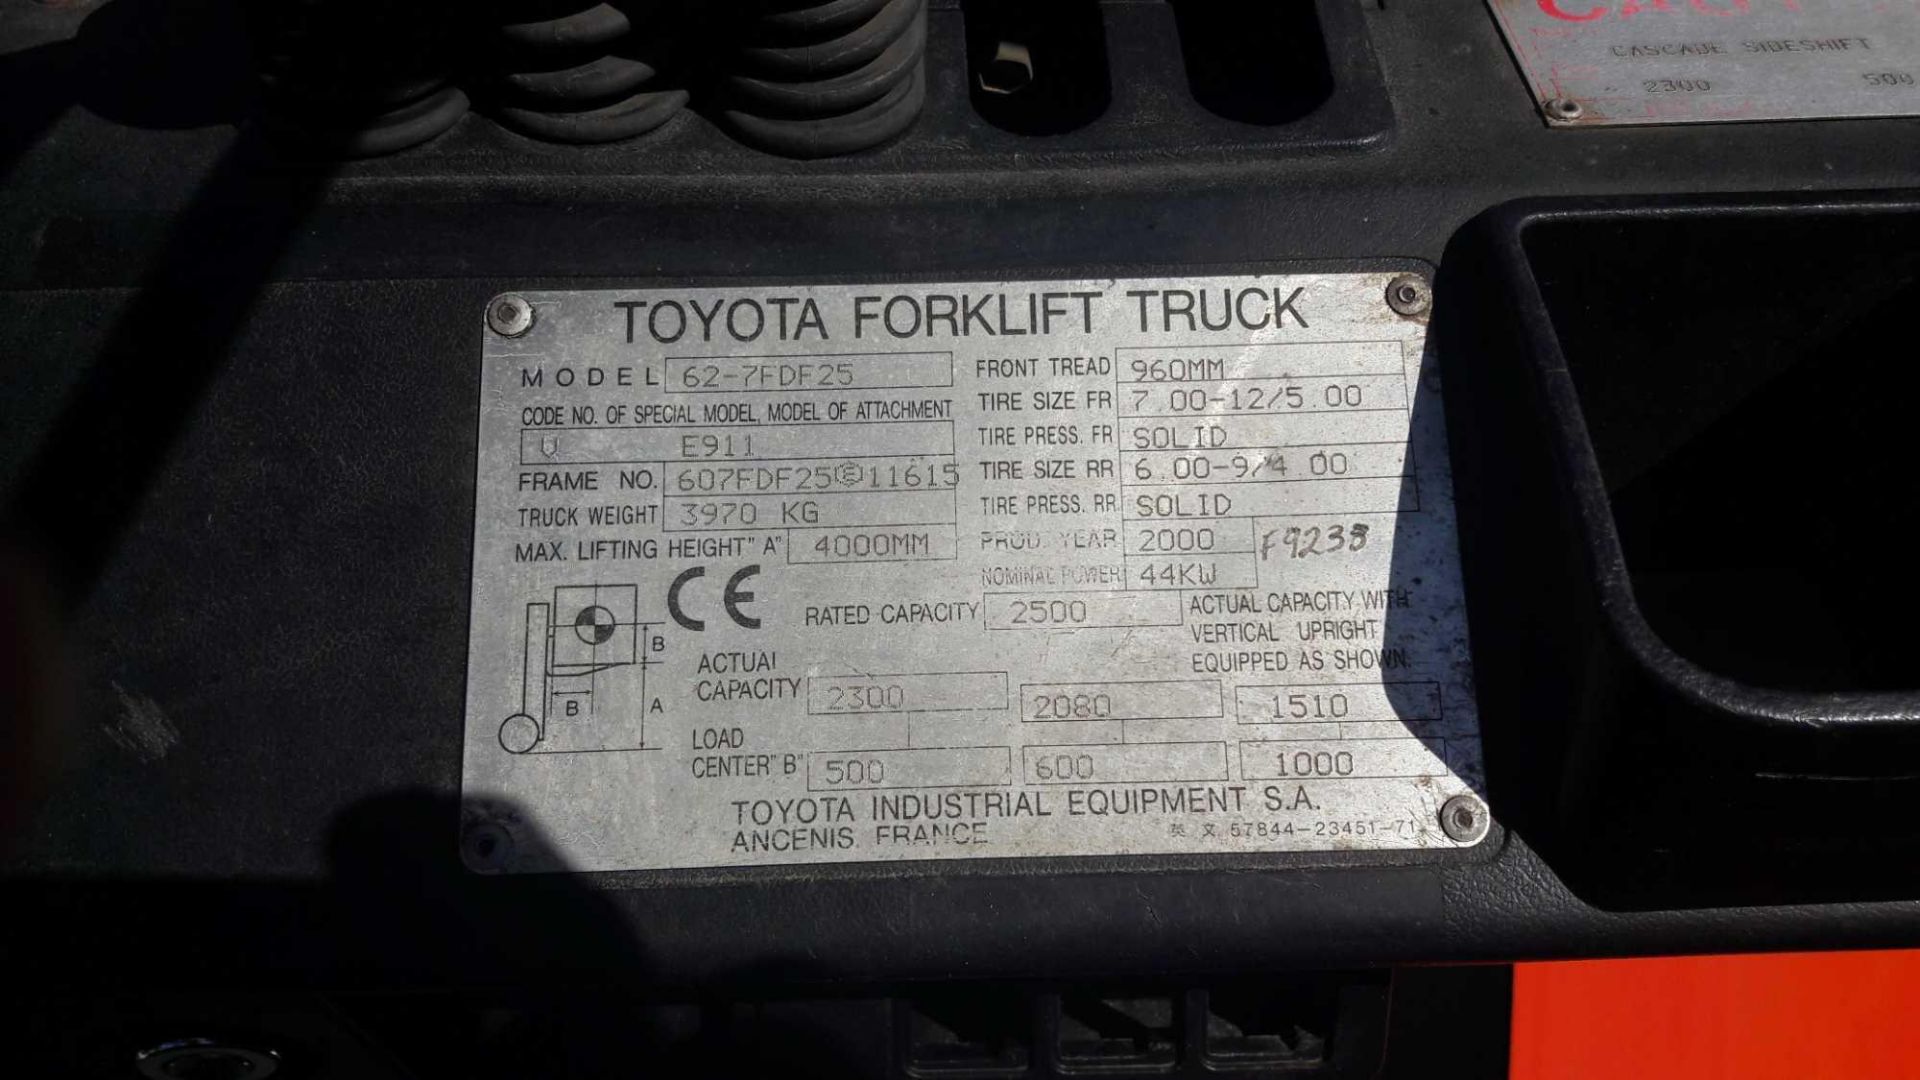 Toyota Industrial Forklift, G2-7FDF25, 10596 Hours, 4M Lift Height, Side Shift, + VAT, - Image 4 of 4